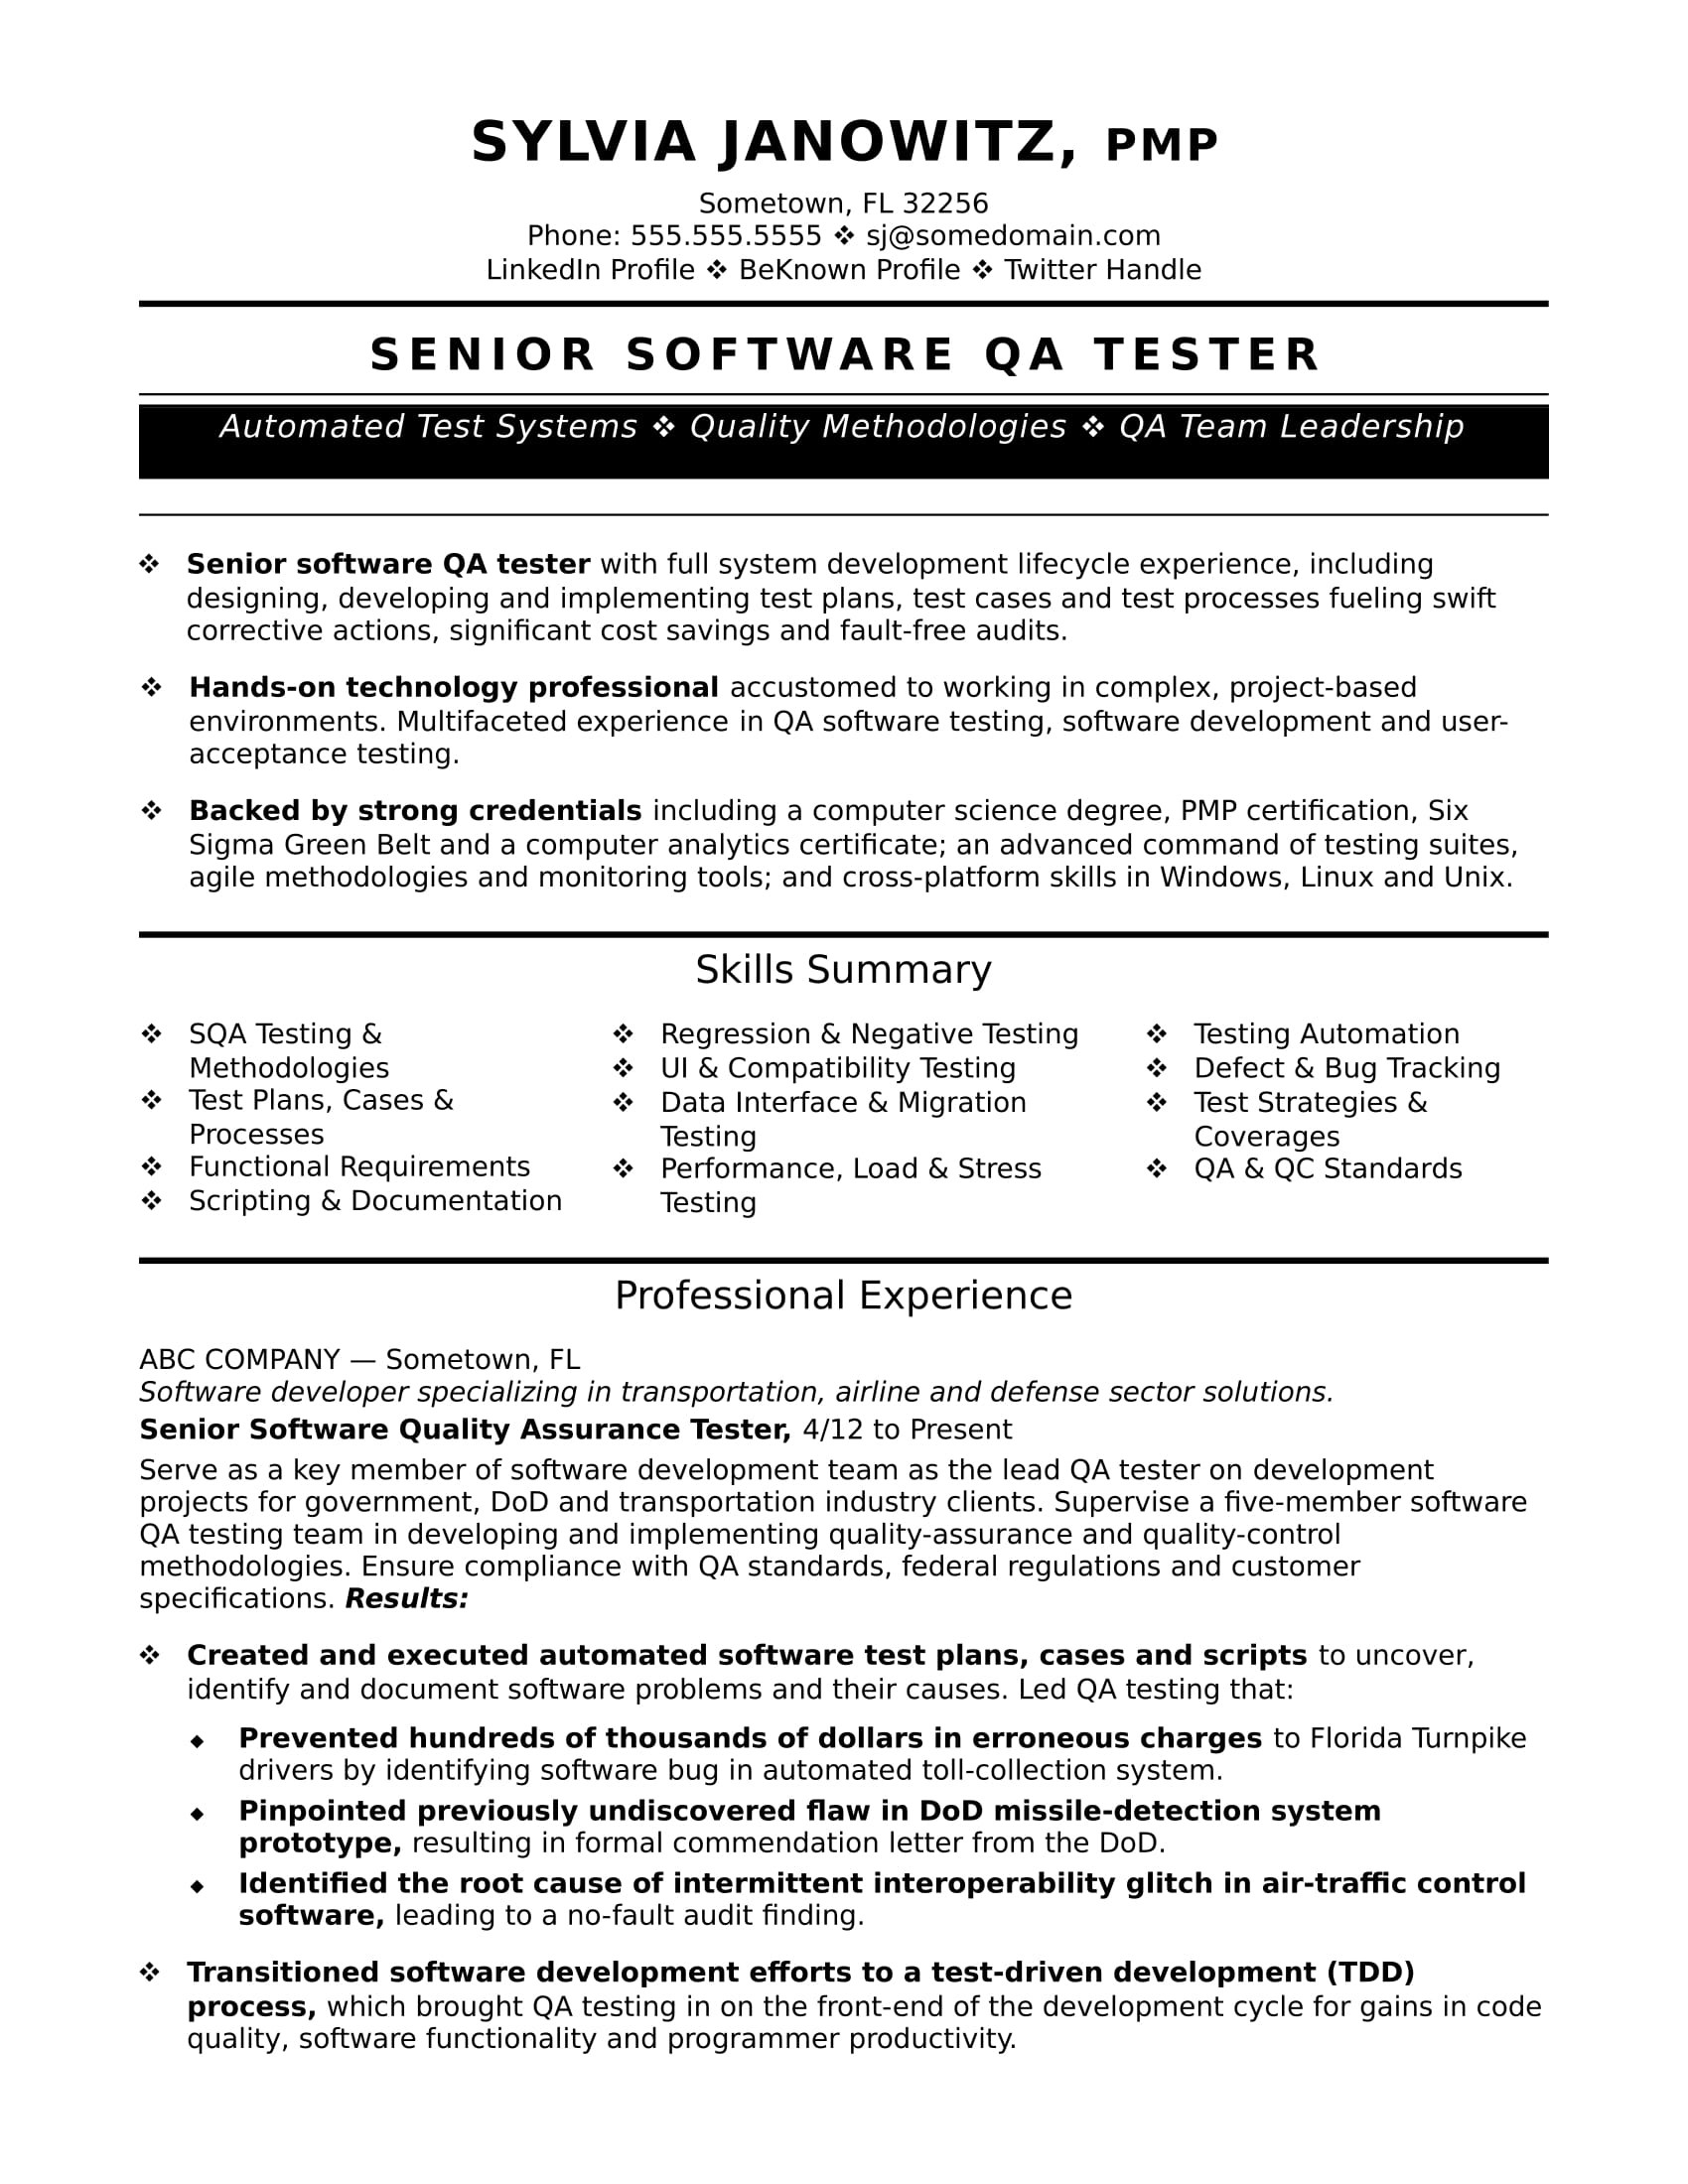 Sample Resume for Performance Test Engineer Experienced Qa software Tester Resume Sample Monster.com